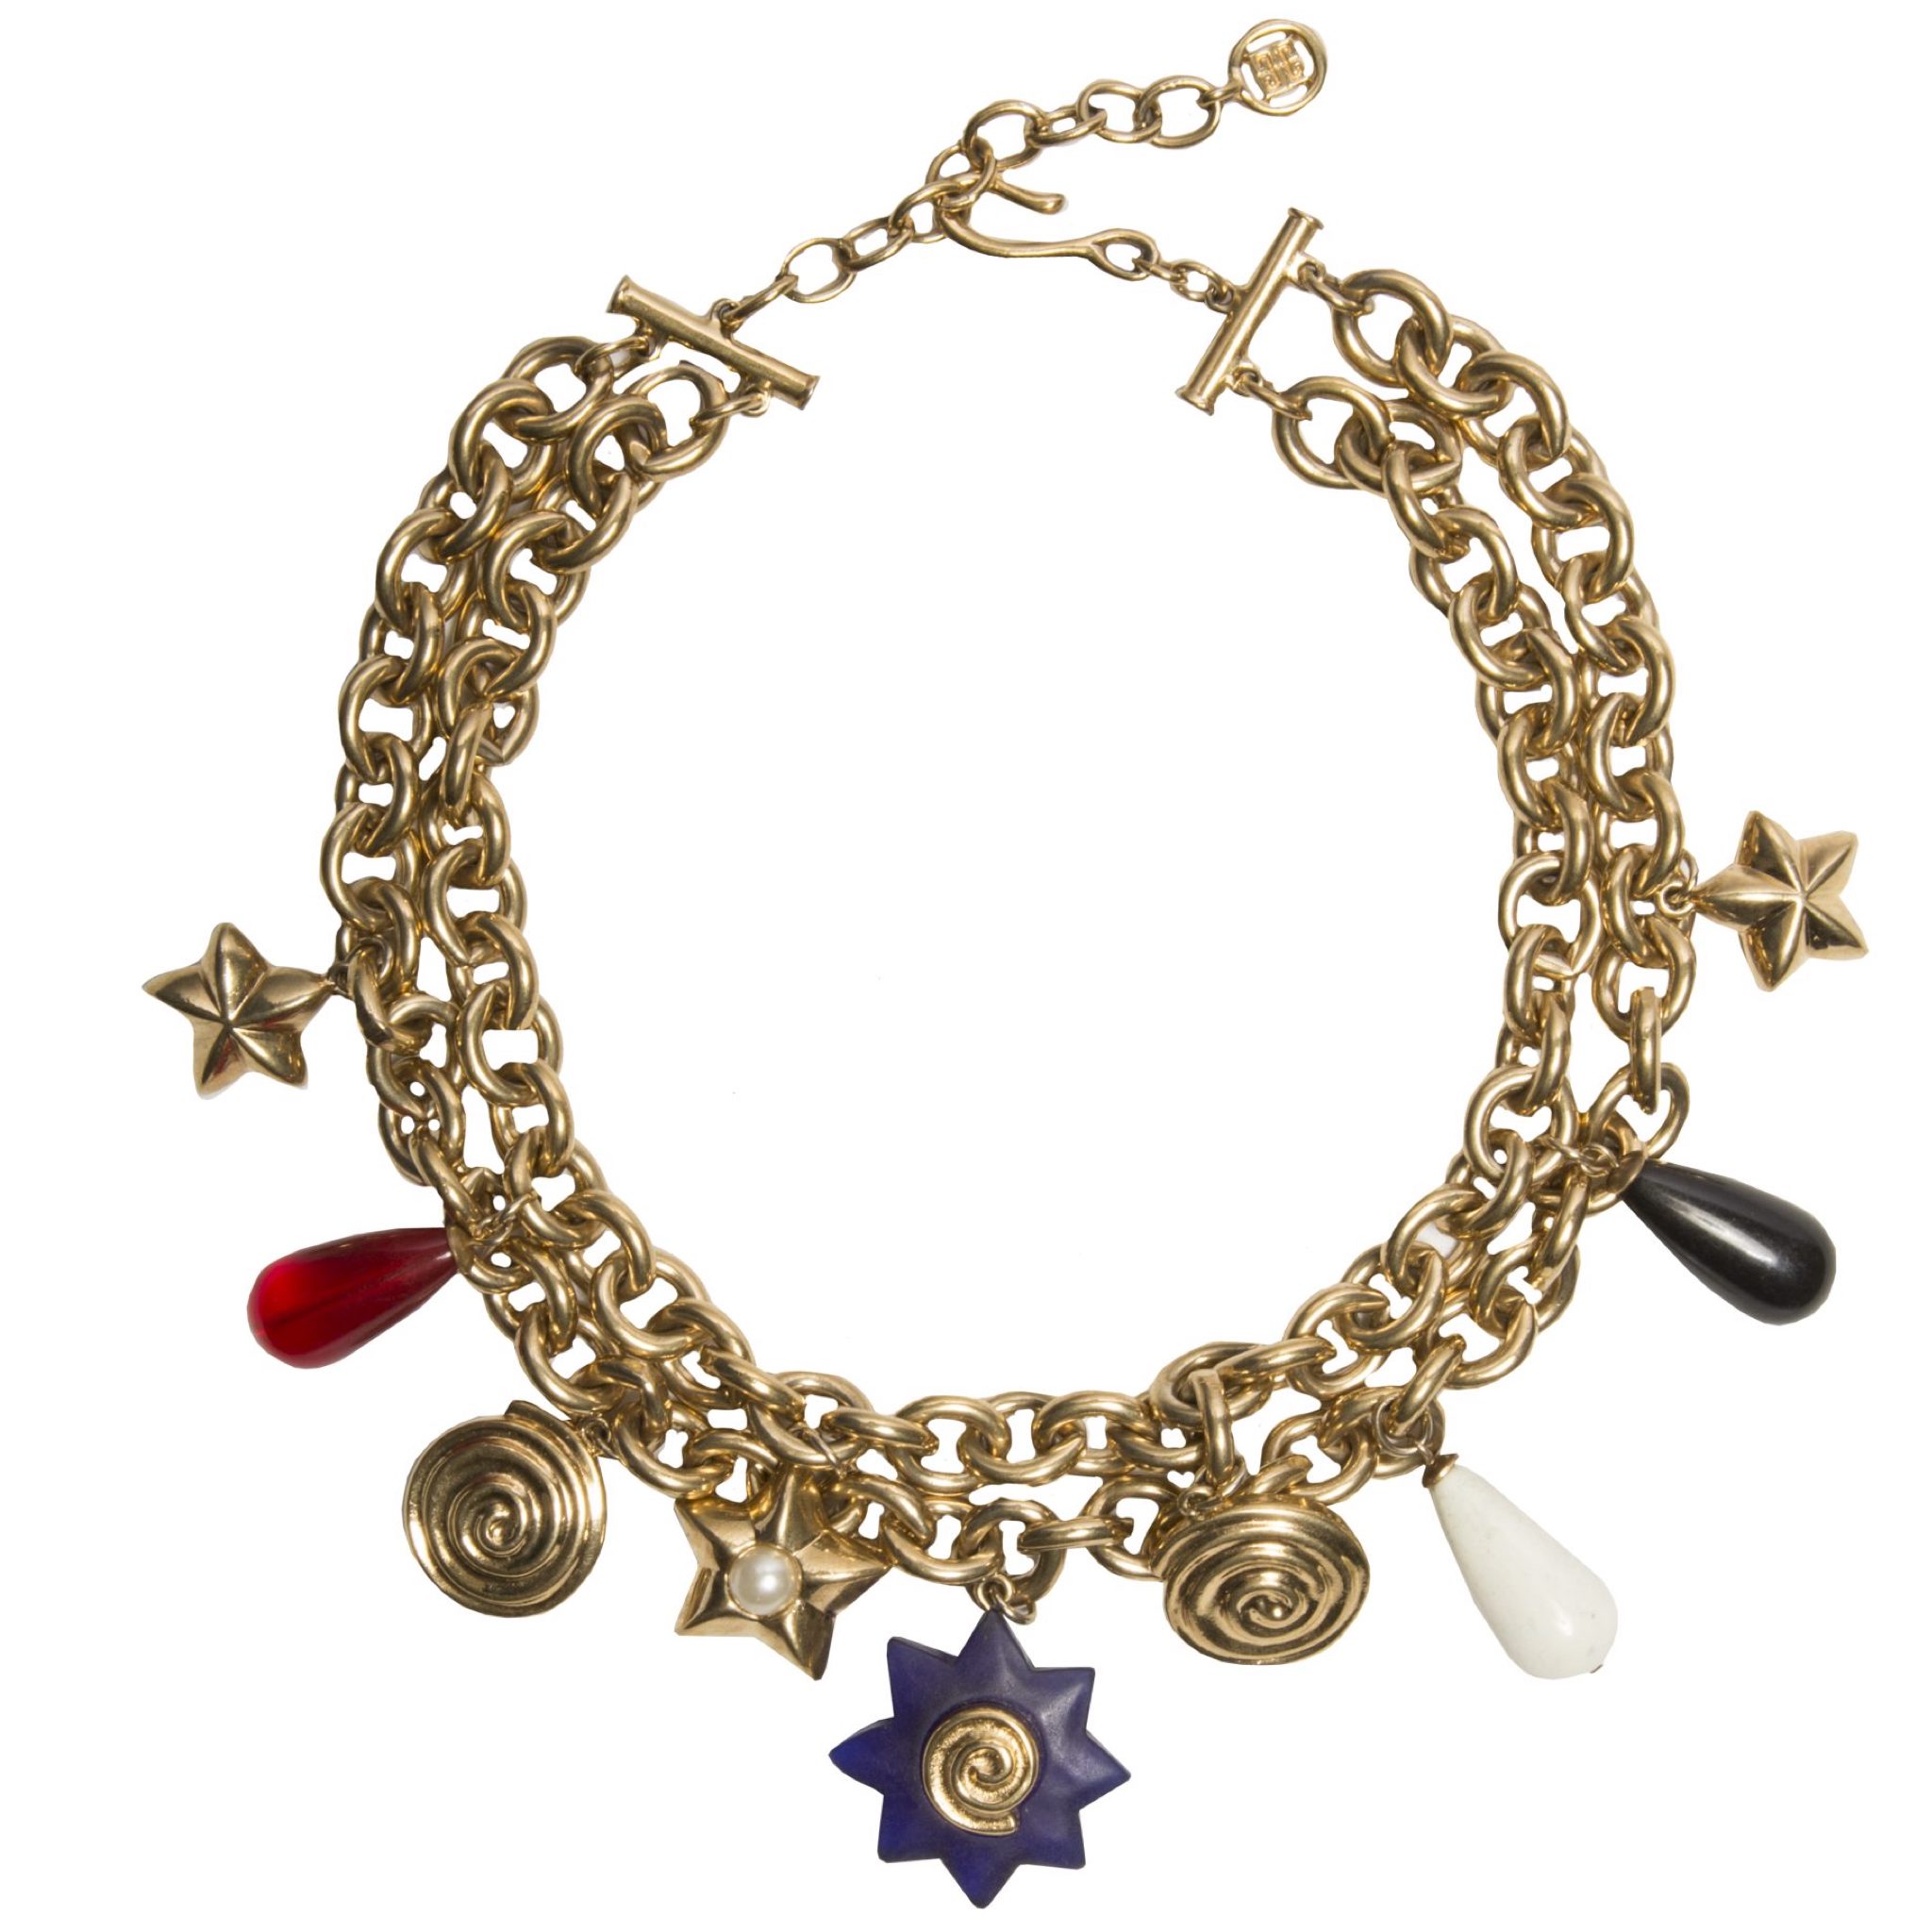 Vintage gold charm necklace with plexiglass